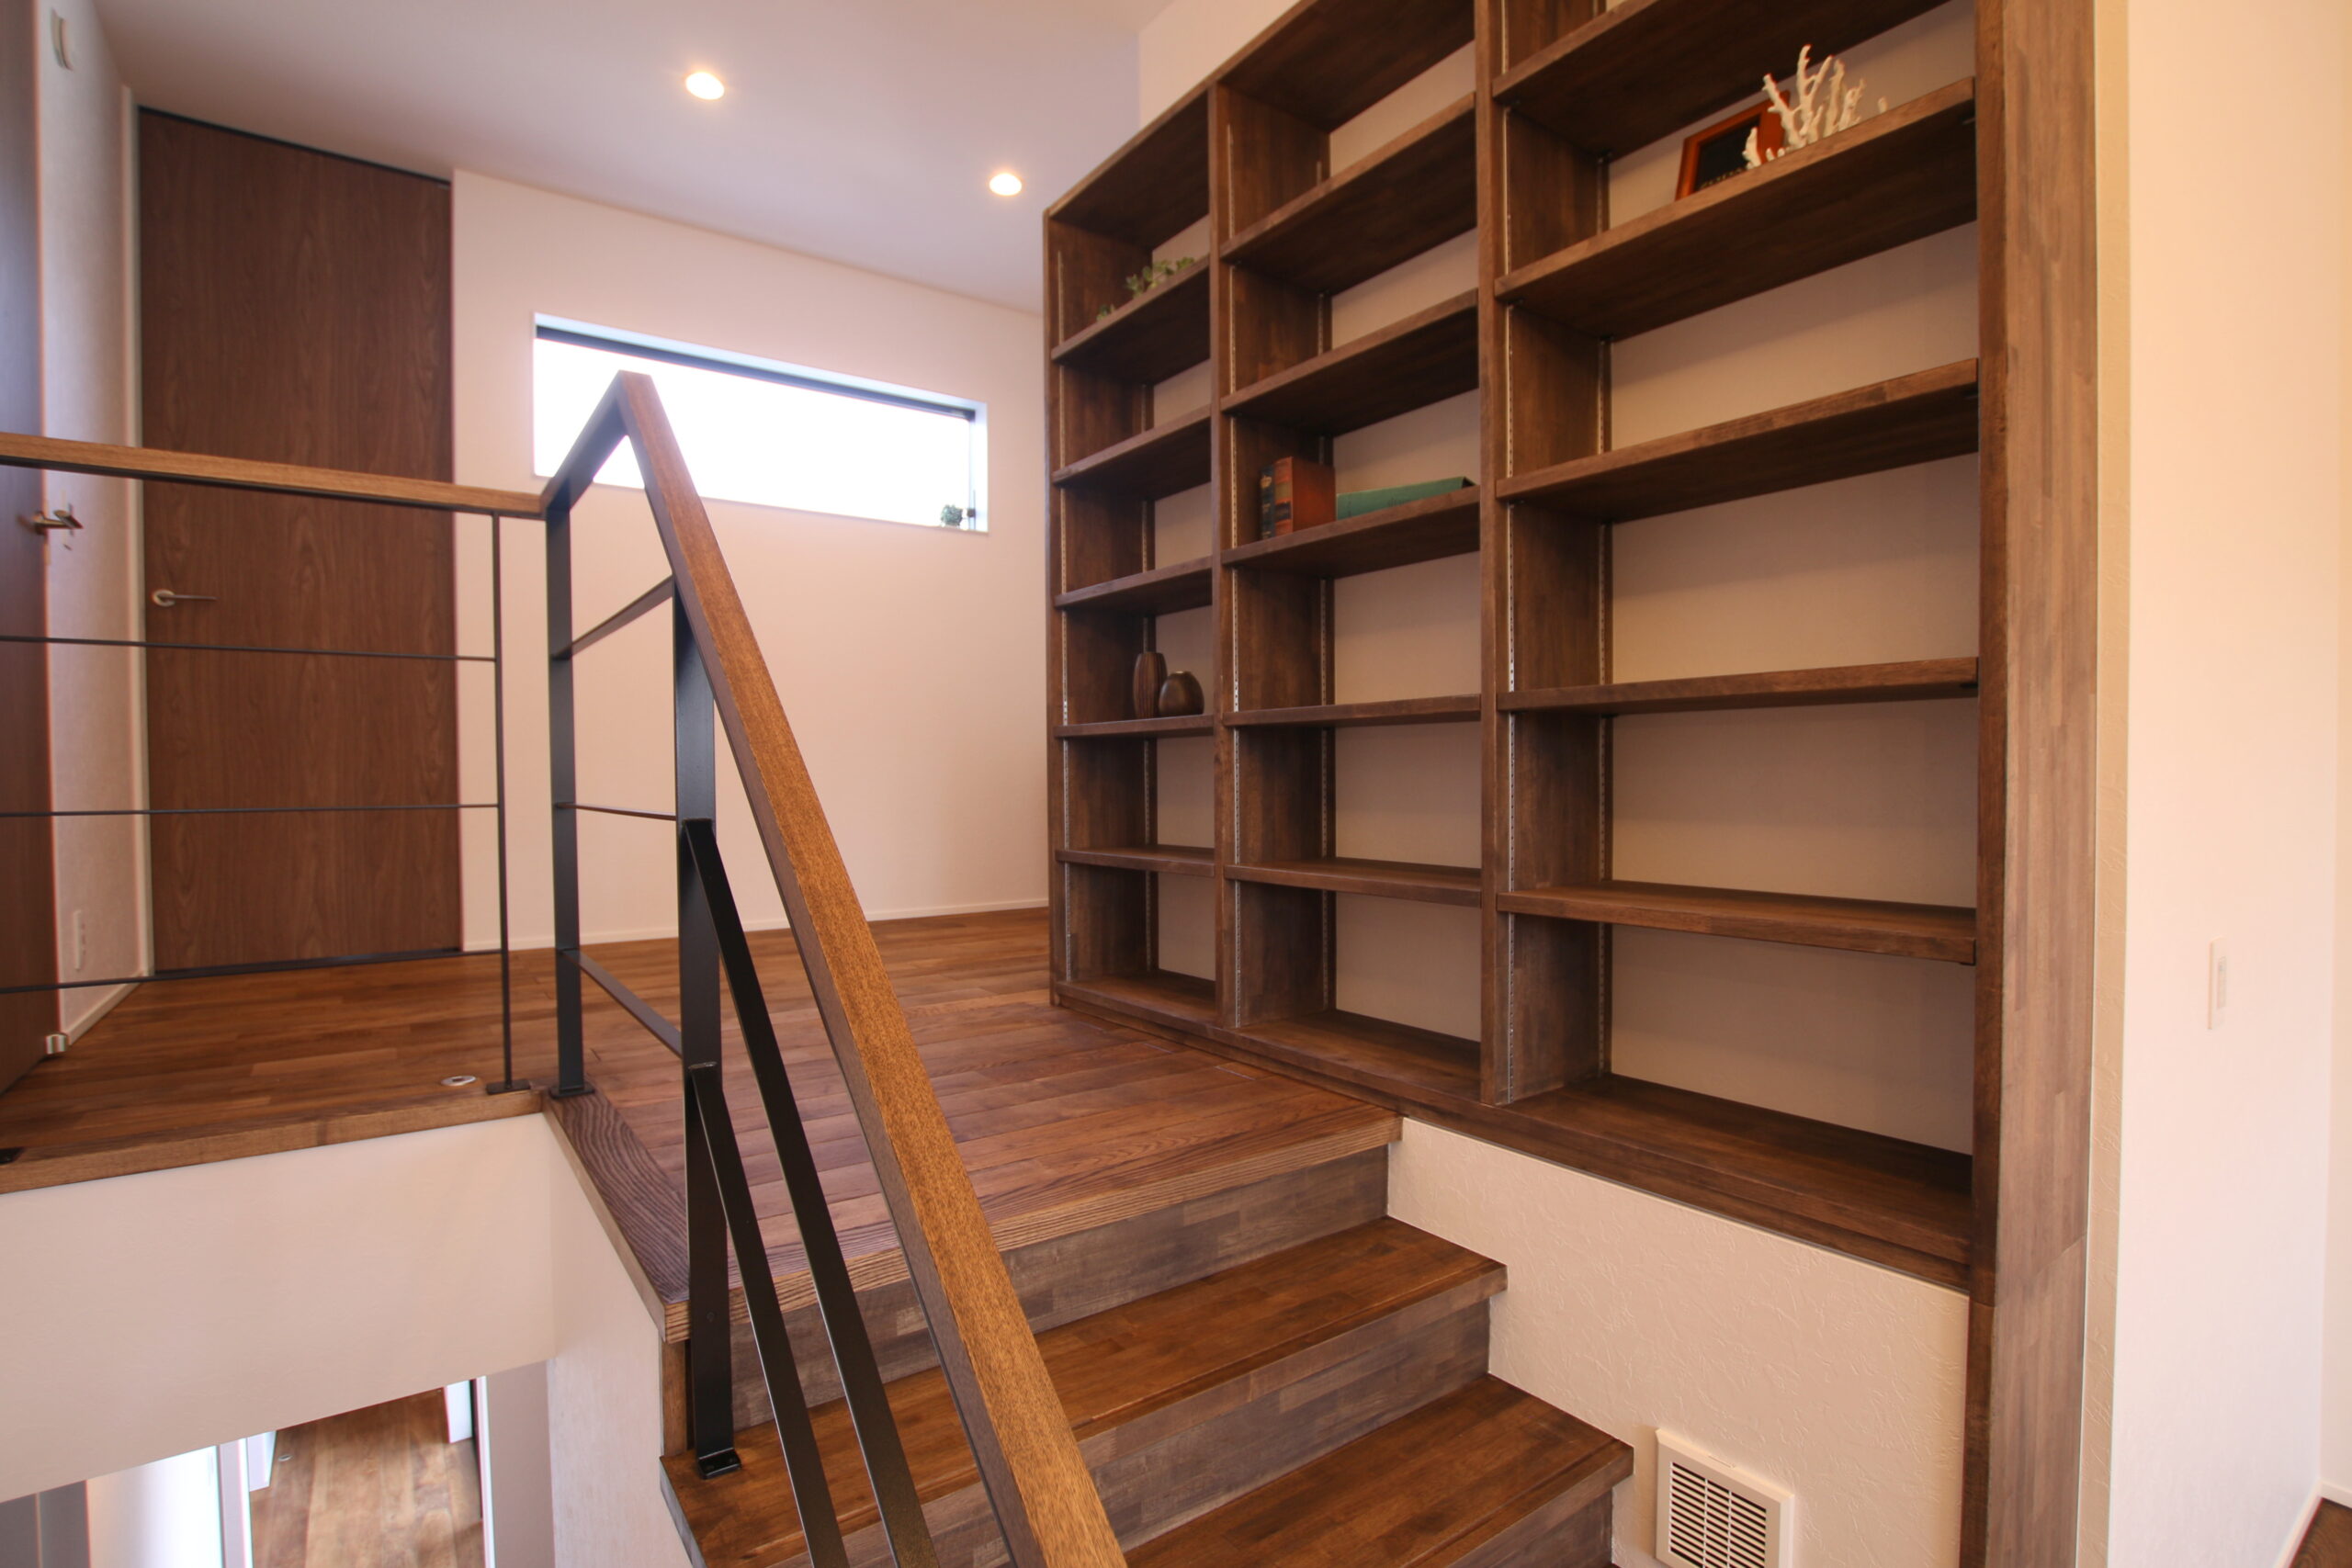 ２Fへ上がる階段部に造作本棚を設け、ふとした時に本をとれる動線中に計画。